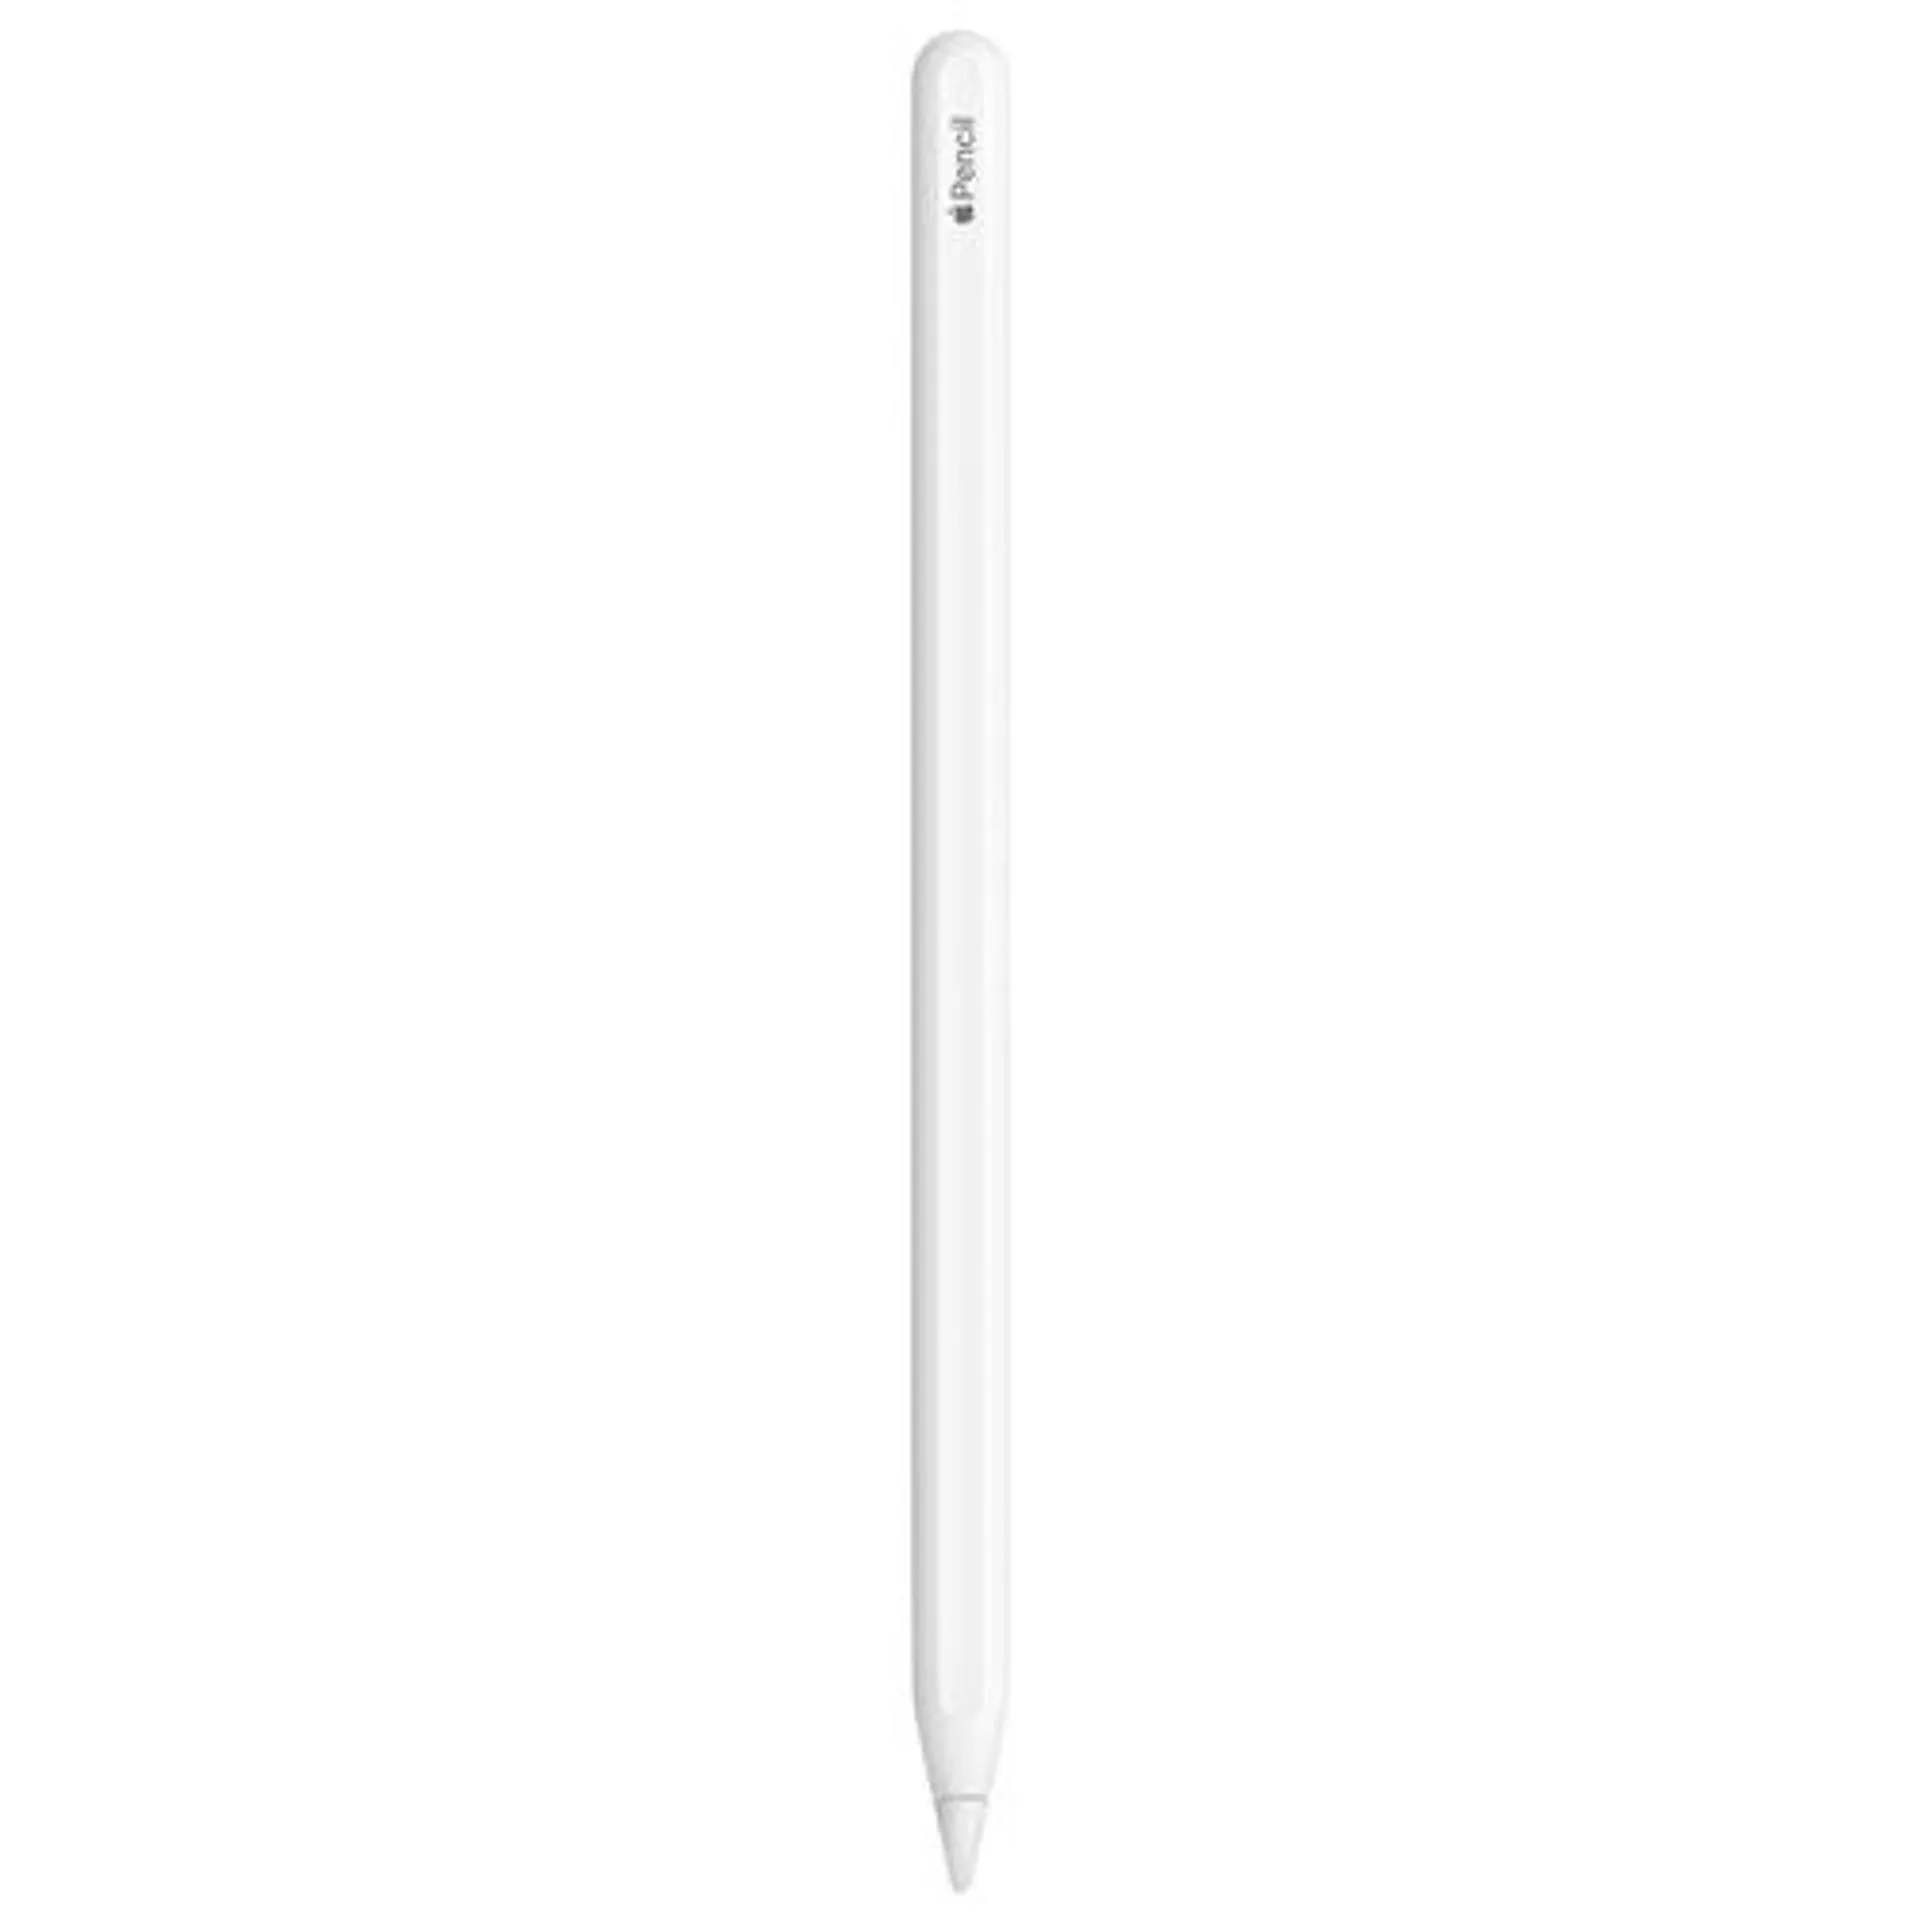 Apple Pencil (2nd Generation) - White - Open Box (10/10 condition)